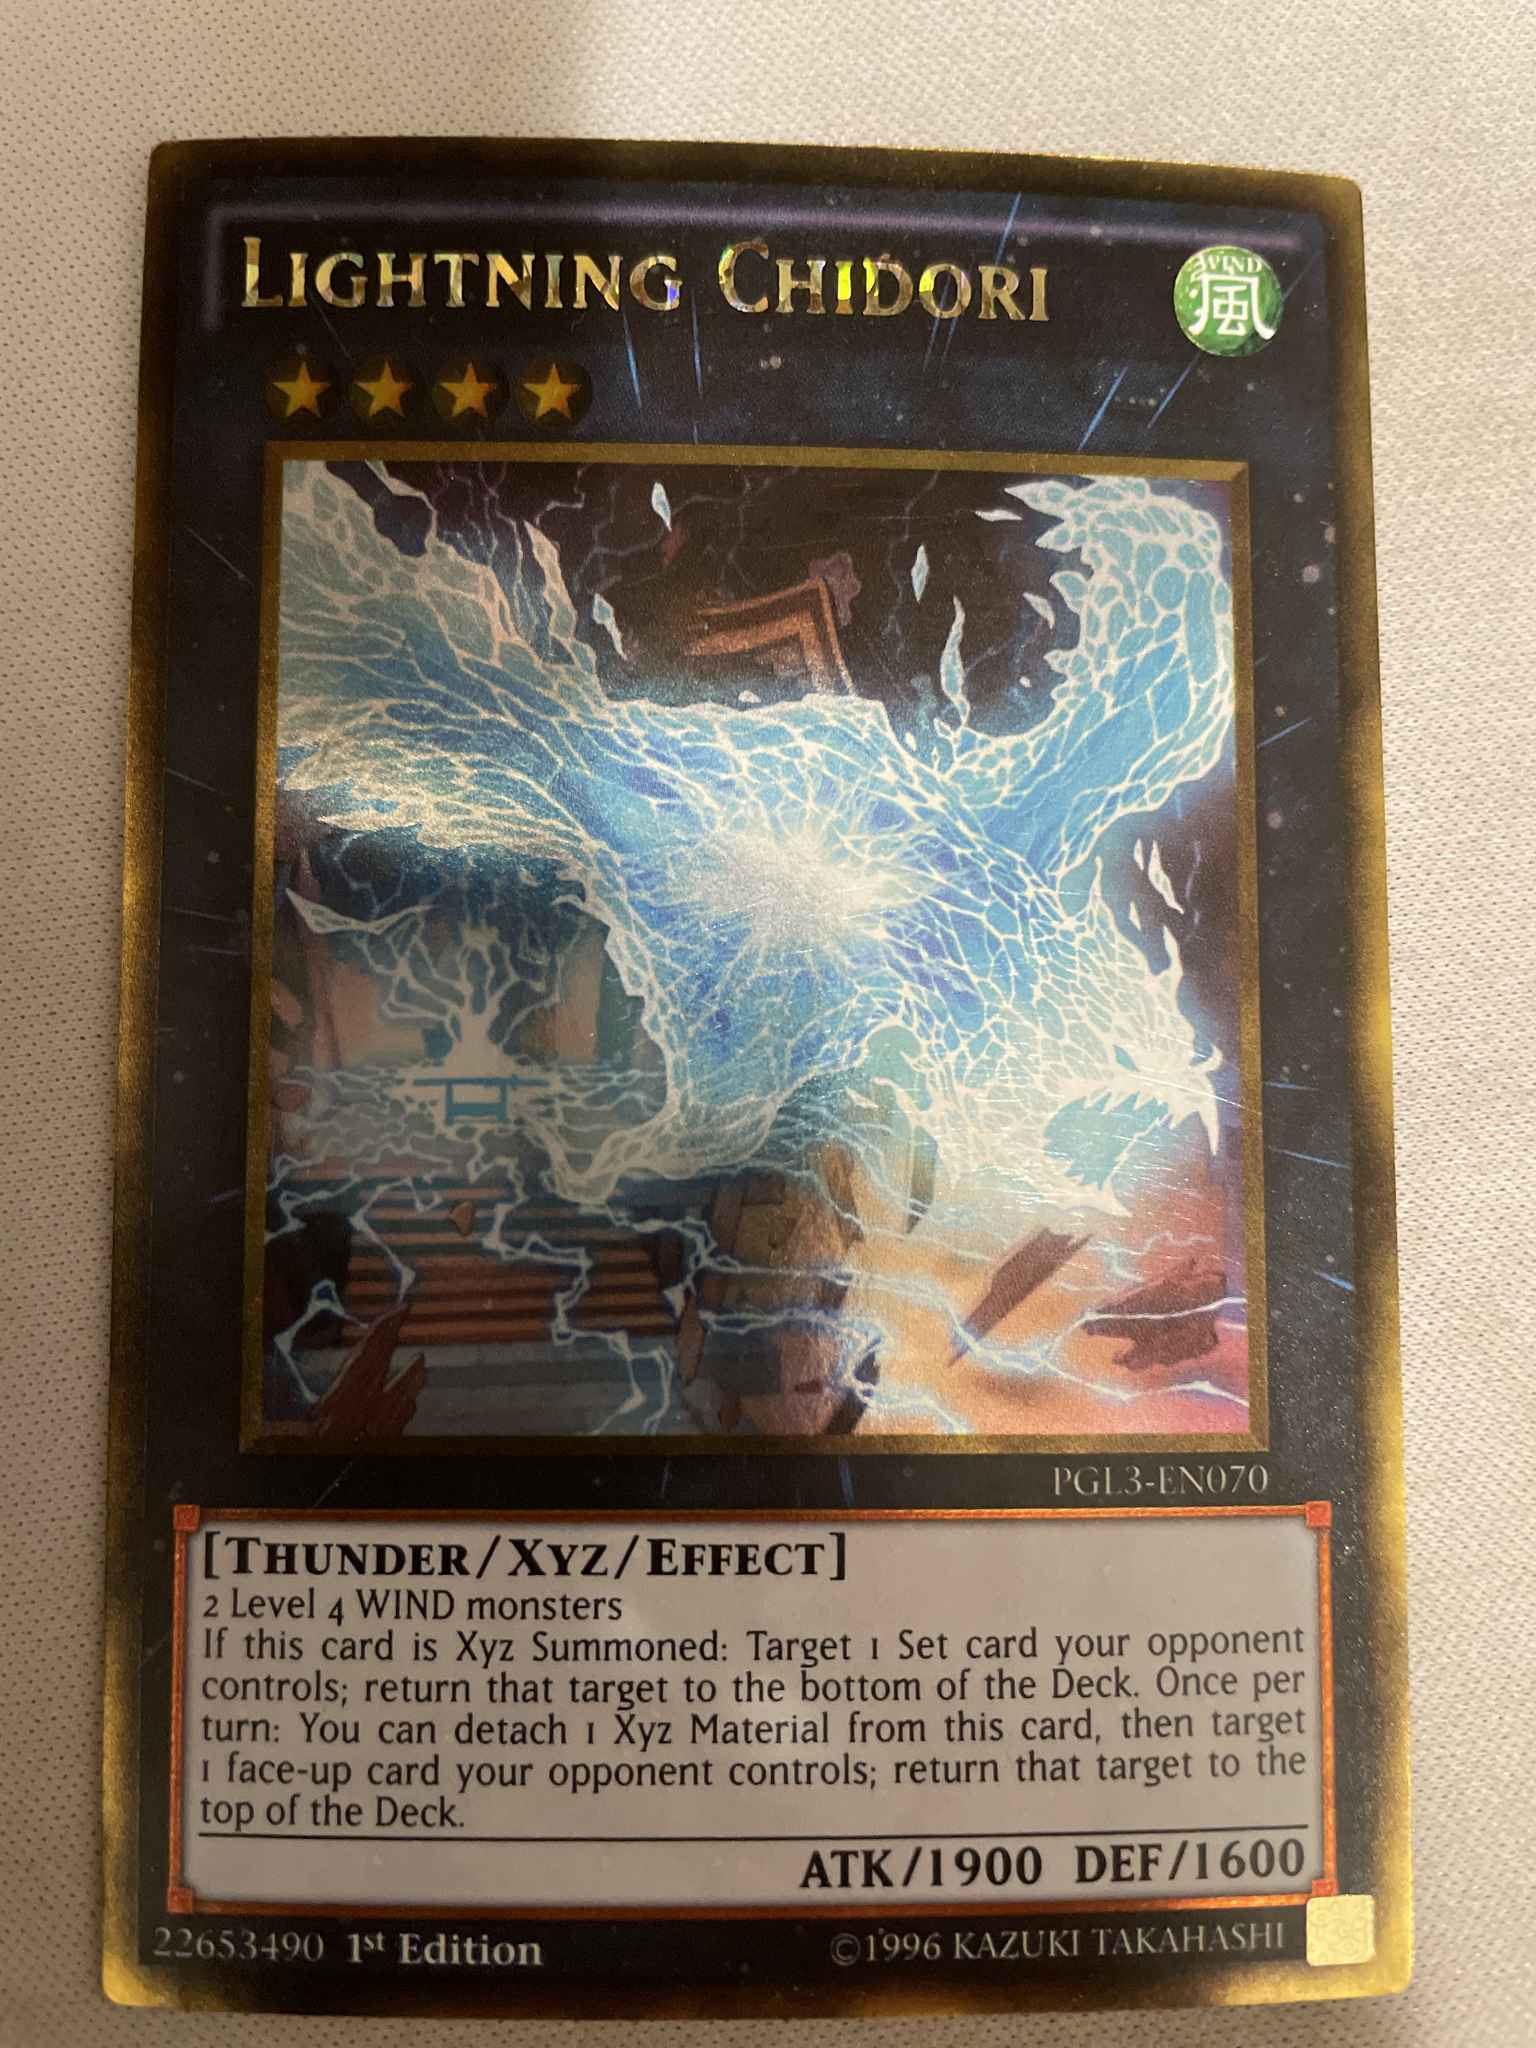 Yugioh *German* Lightning Chidori PGL3-EN070 NM/M 